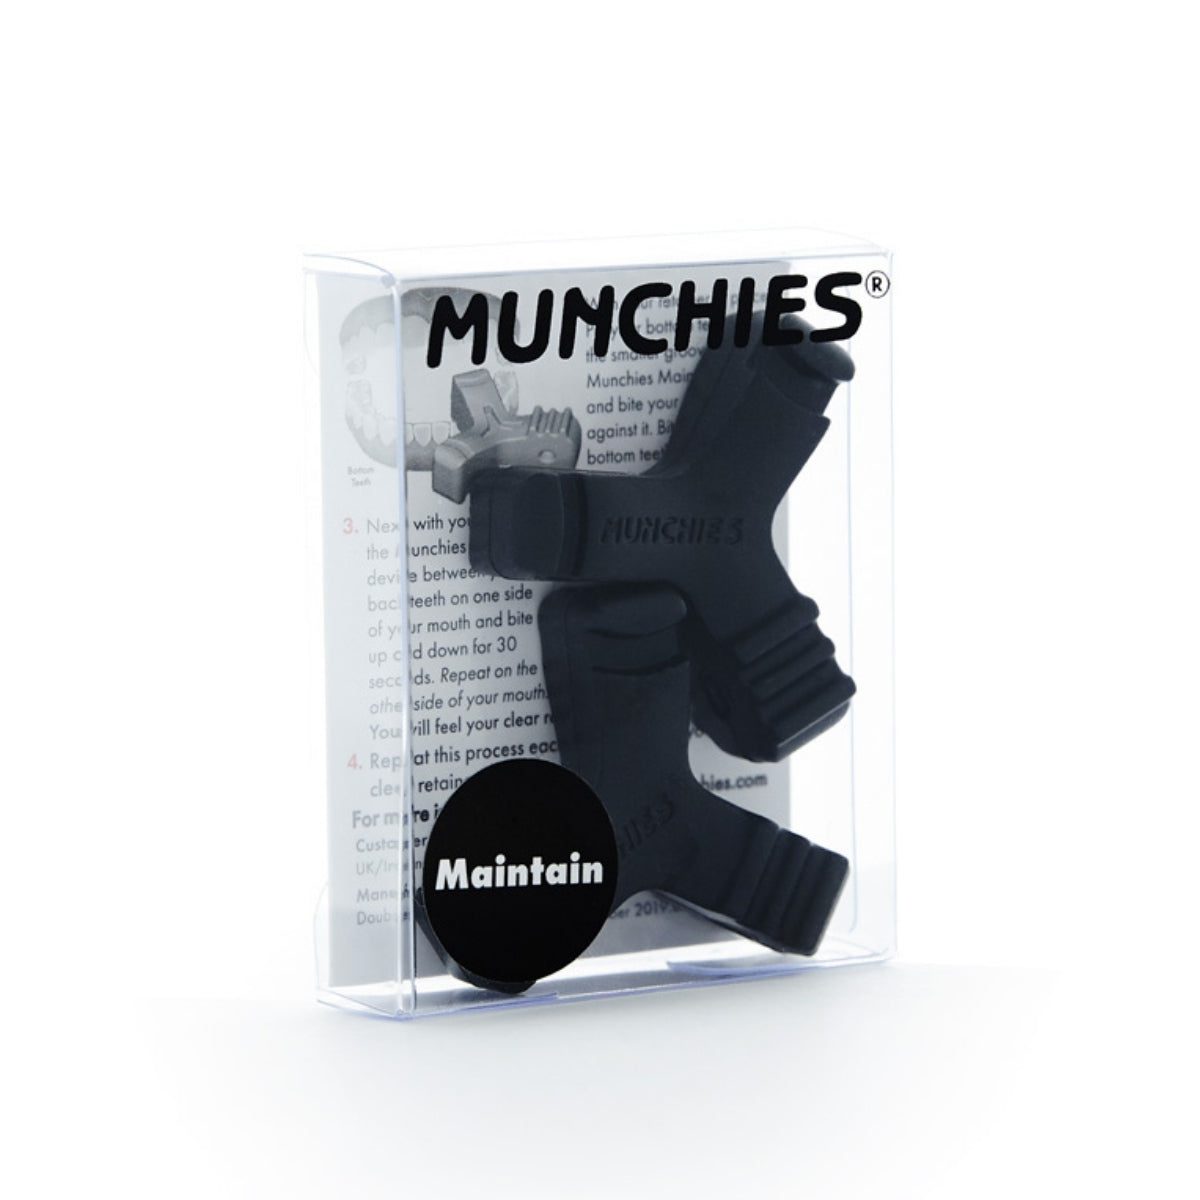 Munchies® Maintain 2 Piece Pack